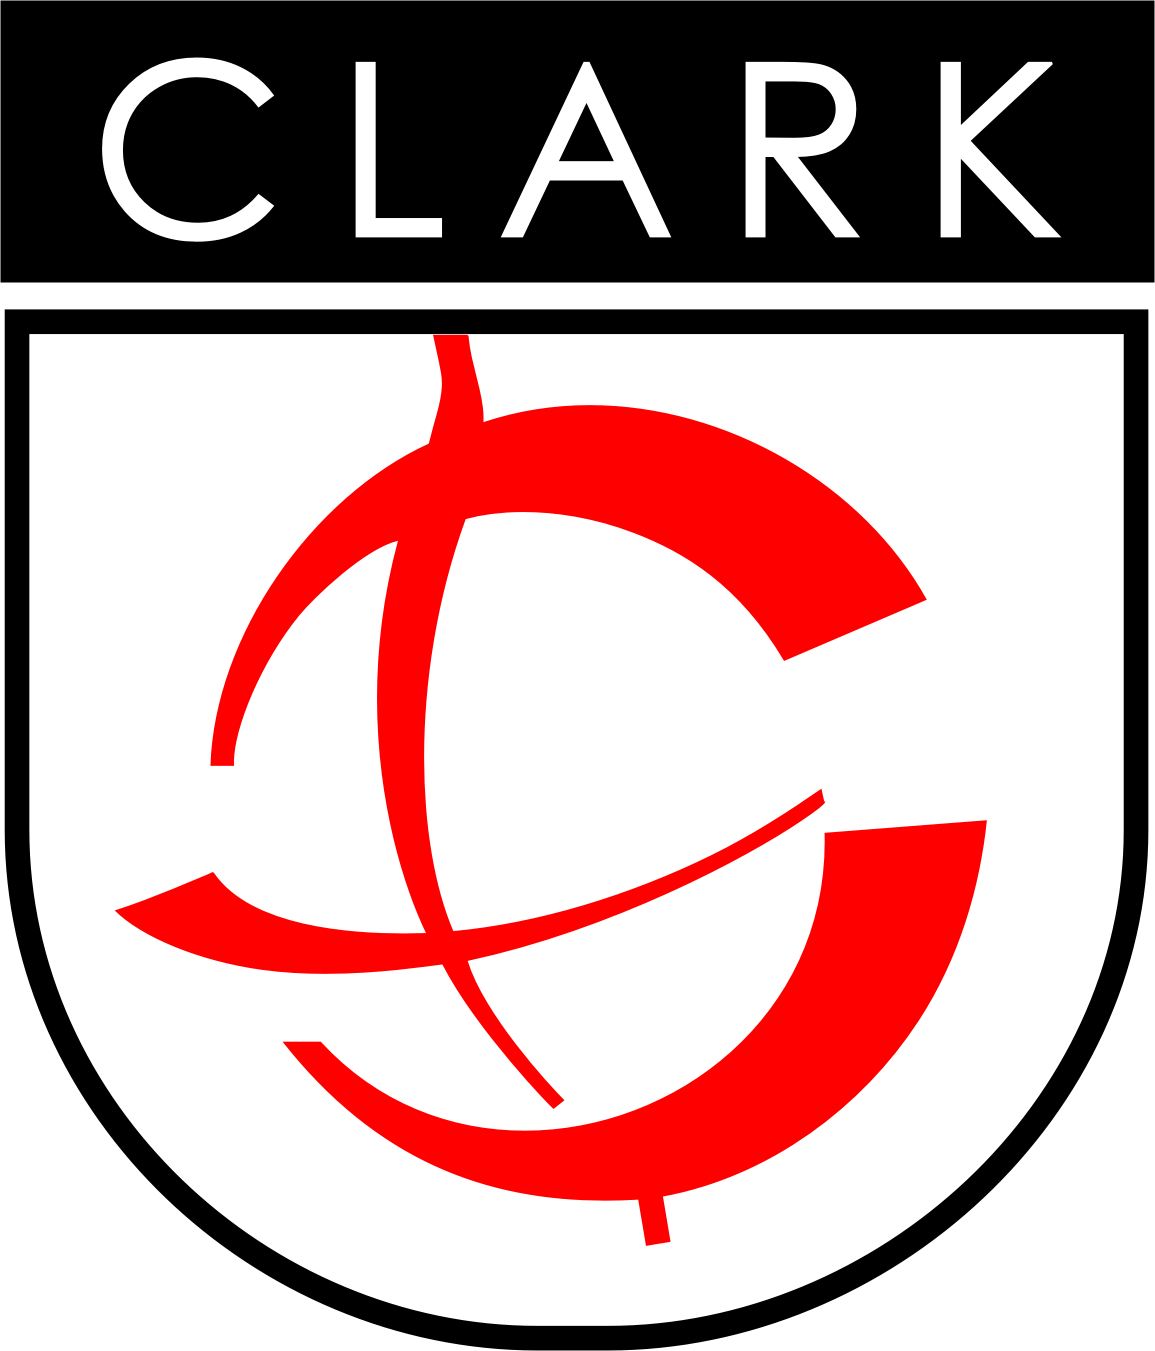 http://www.net4info.de/photos/cpg/albums/userpics/10002/Clark_University_logo.jpg